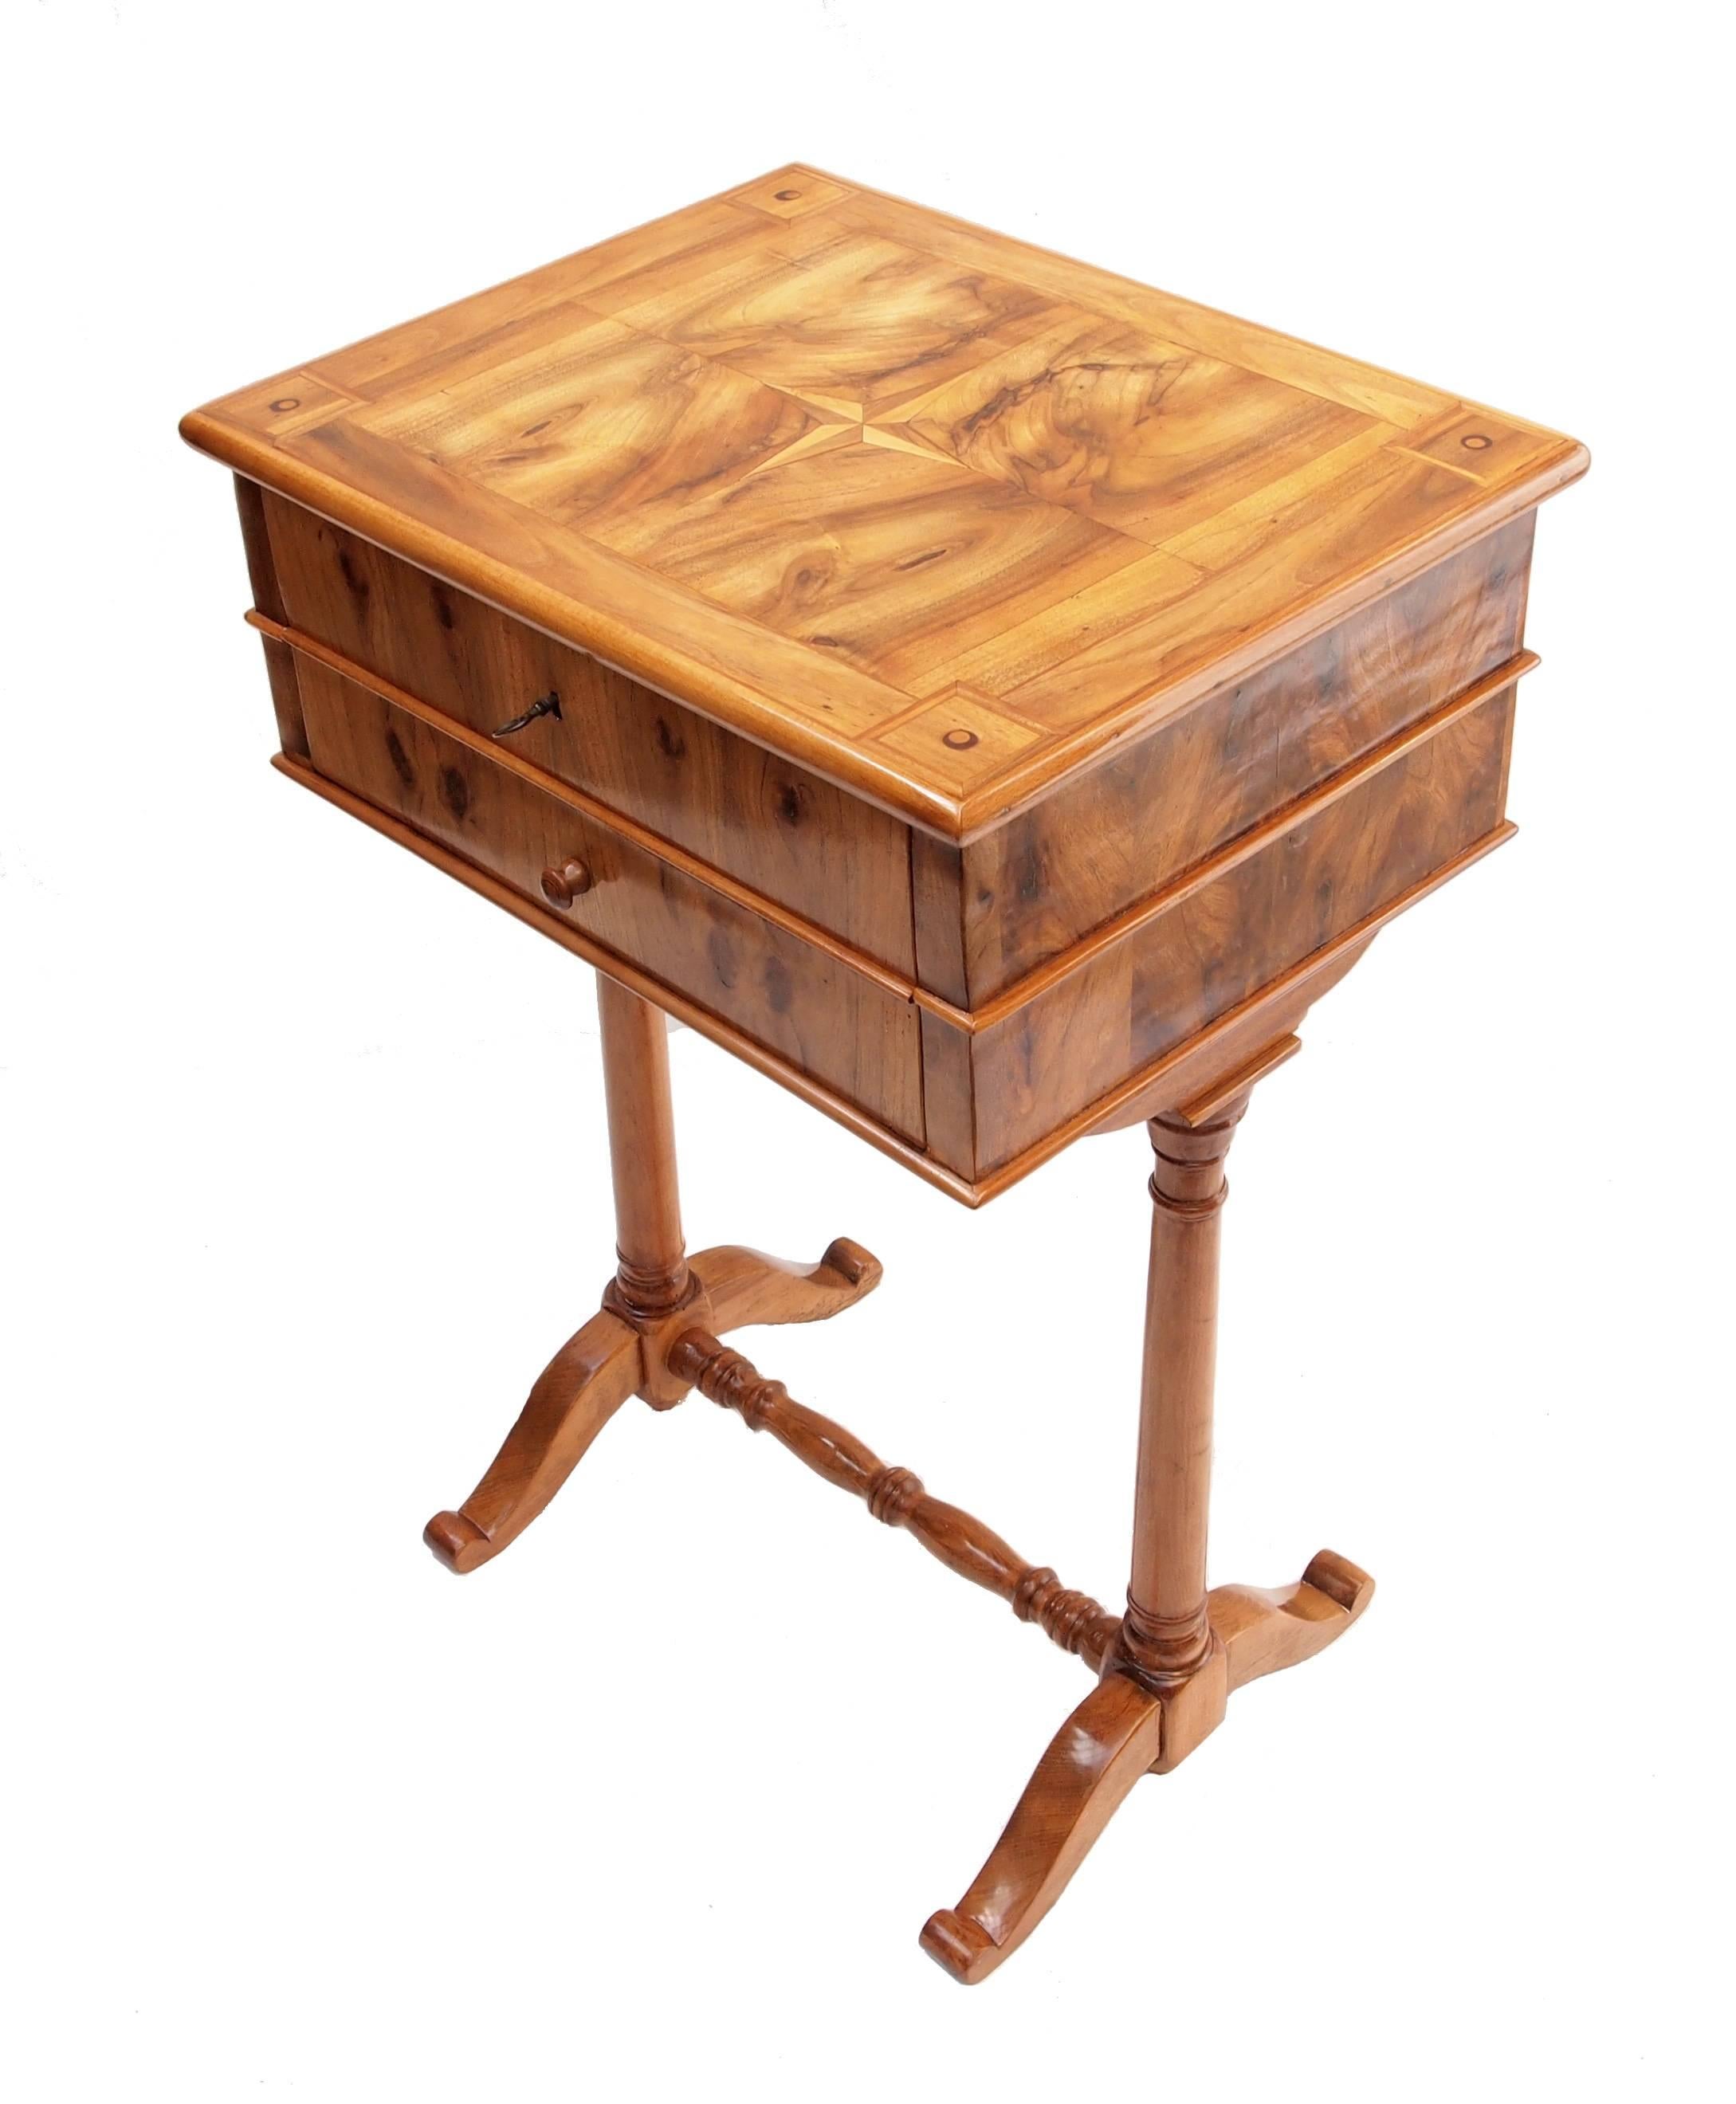 Polished 19th Century Biedermeier Walnut Sewing Table from Germany